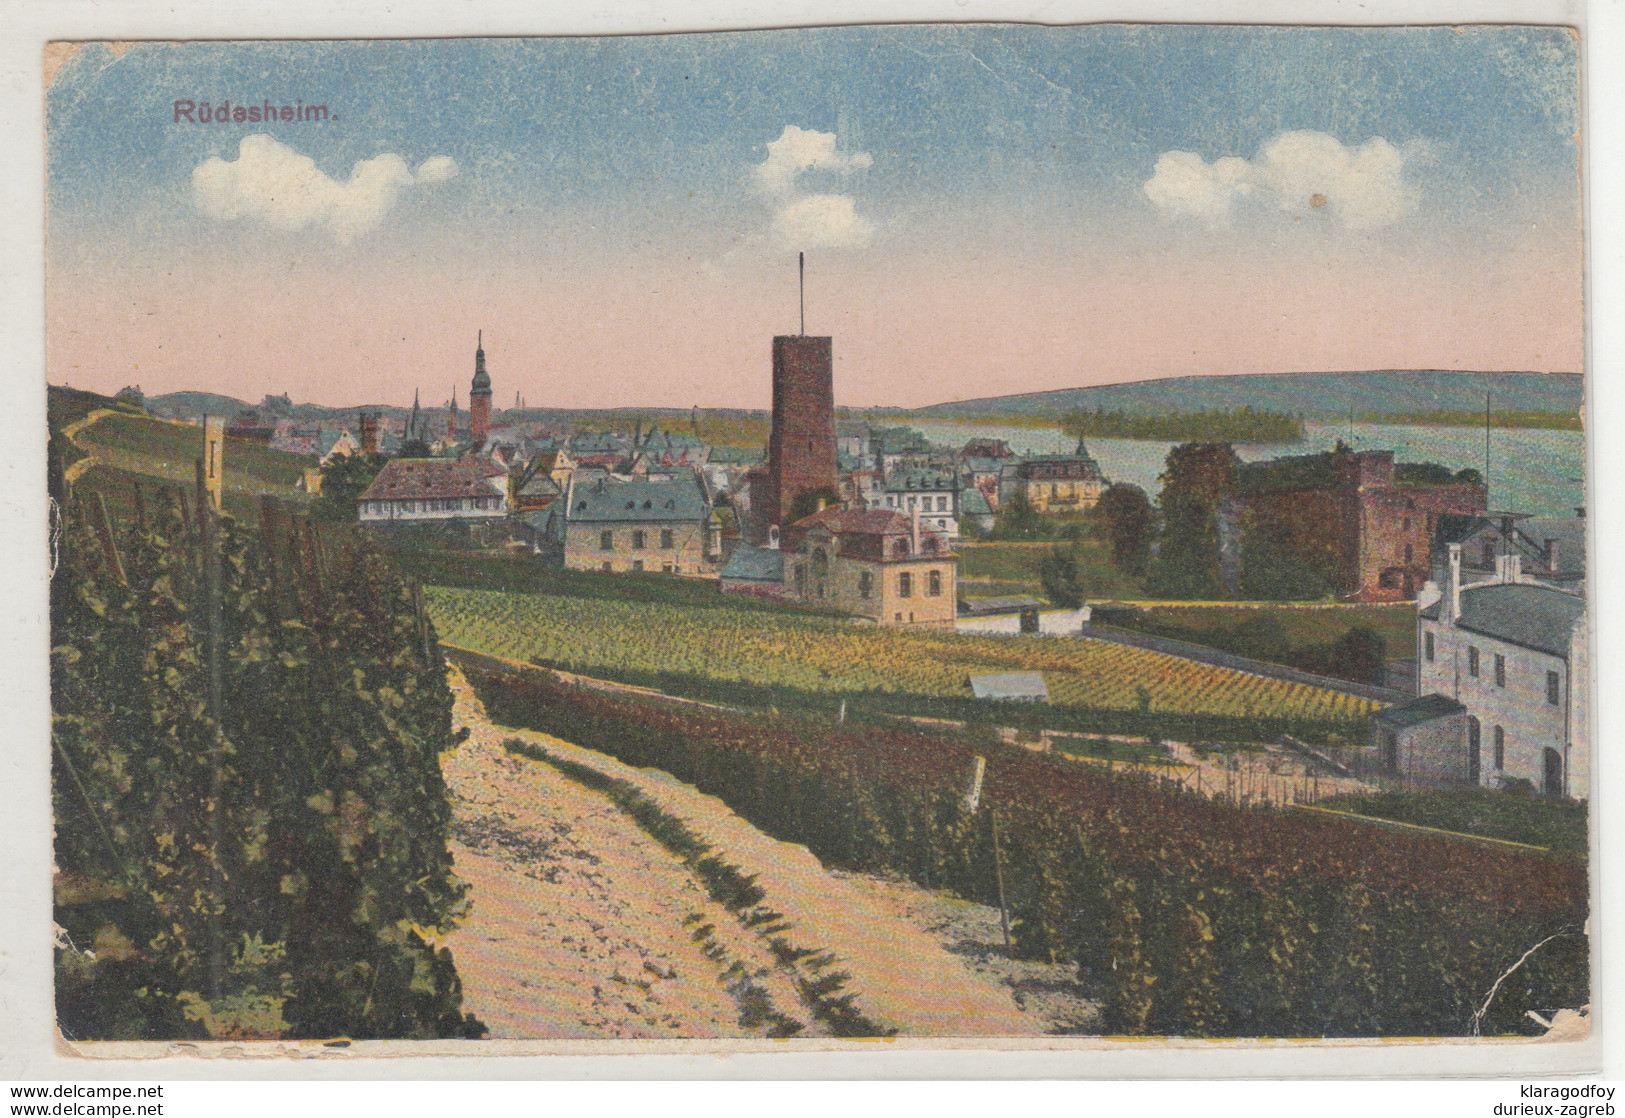 Poste Militarire Balgique Belgie Legerposterij Postmark On Rüdesheim Postcard Travelled 1921 To St. Niklaas B181020 - OC38/54 Belgische Besetzung In Deutschland